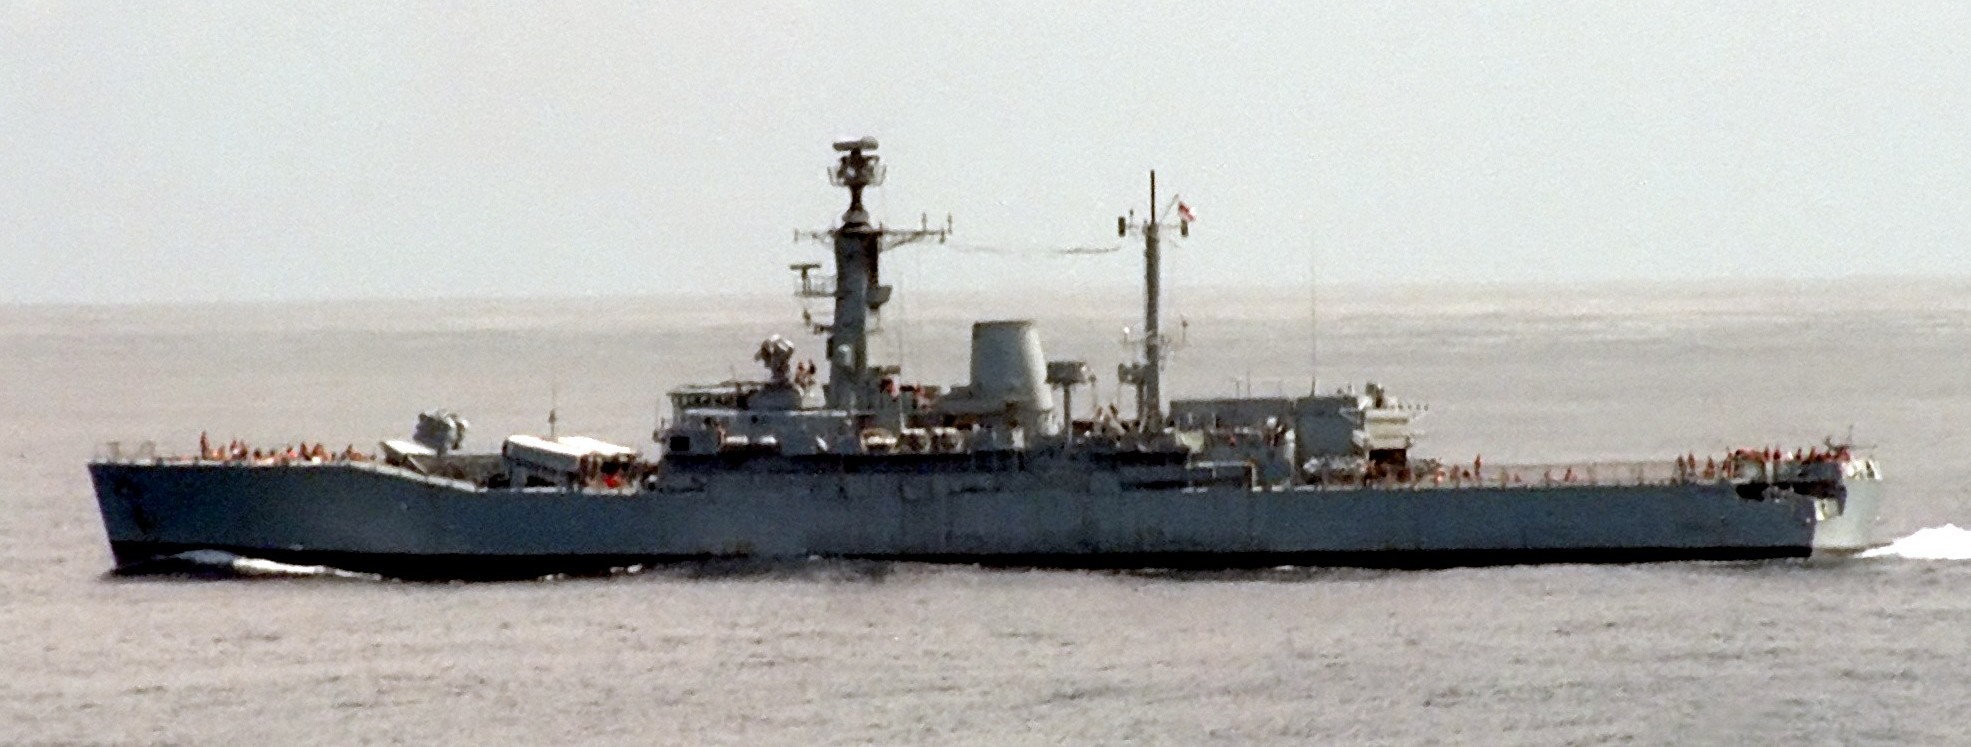 type 12i leander class frigate royal navy seawolf sam missile gws-25 mm.38 exocet ssm